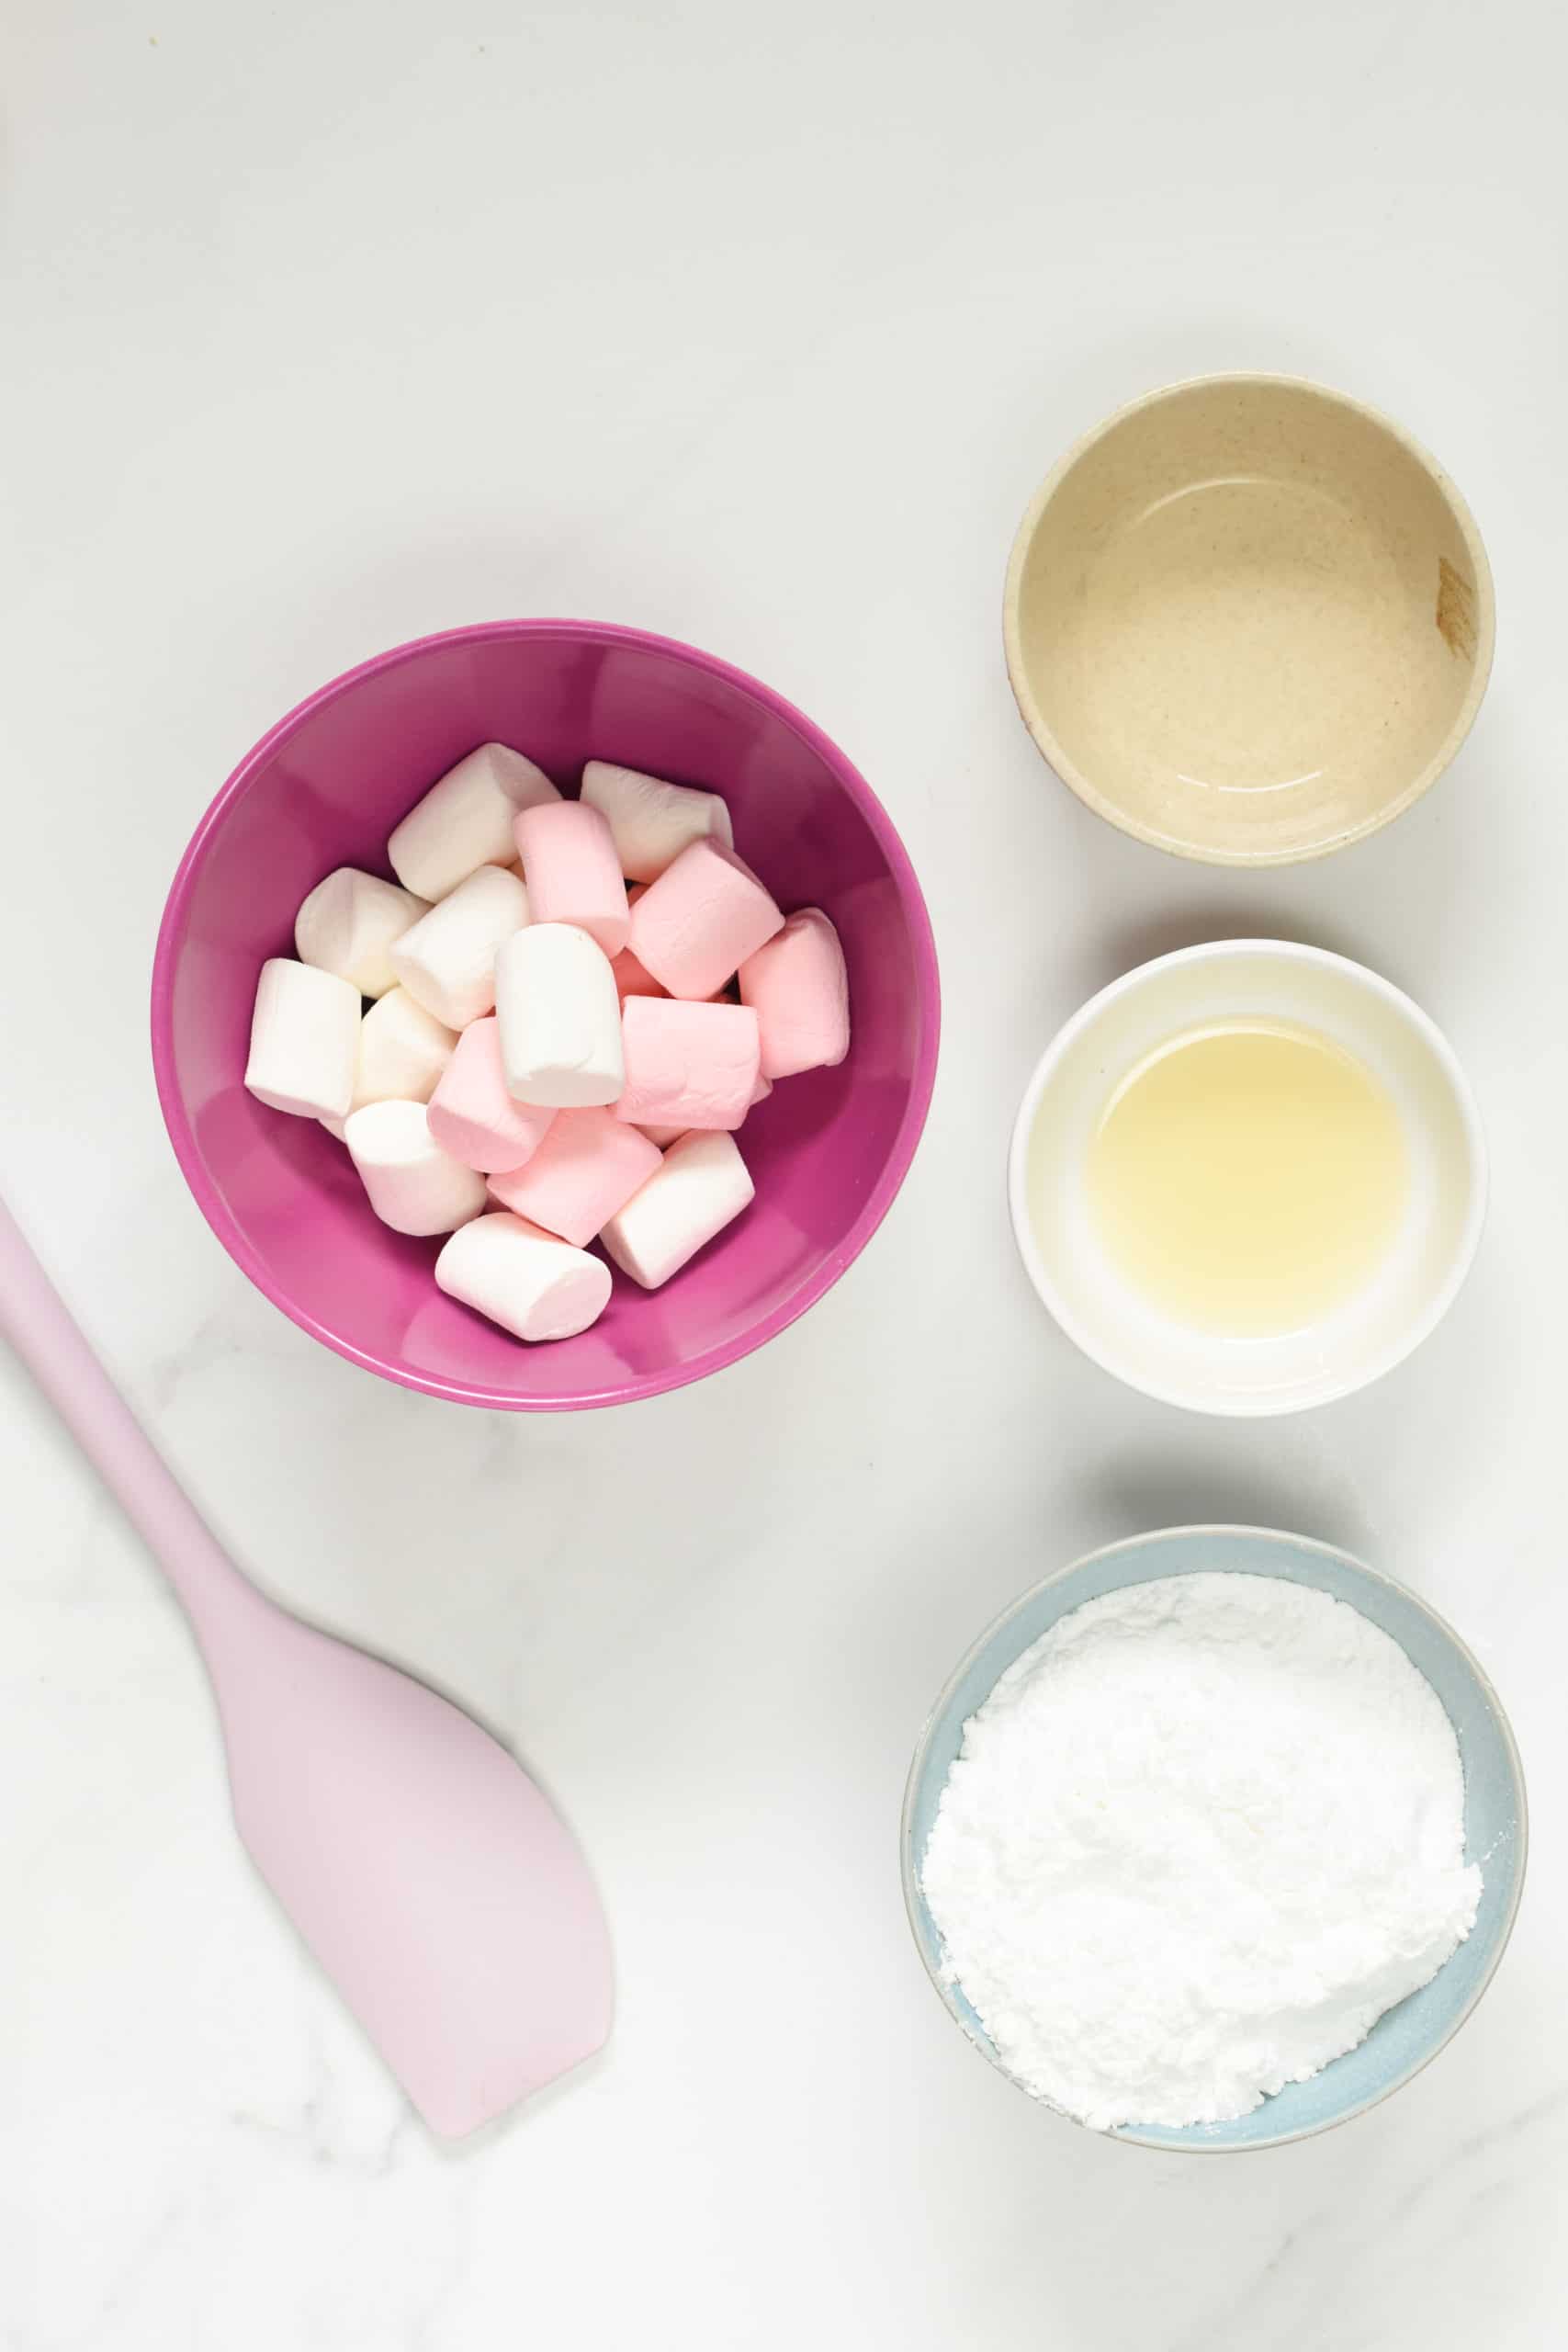 Ingredients marshmallow playdough